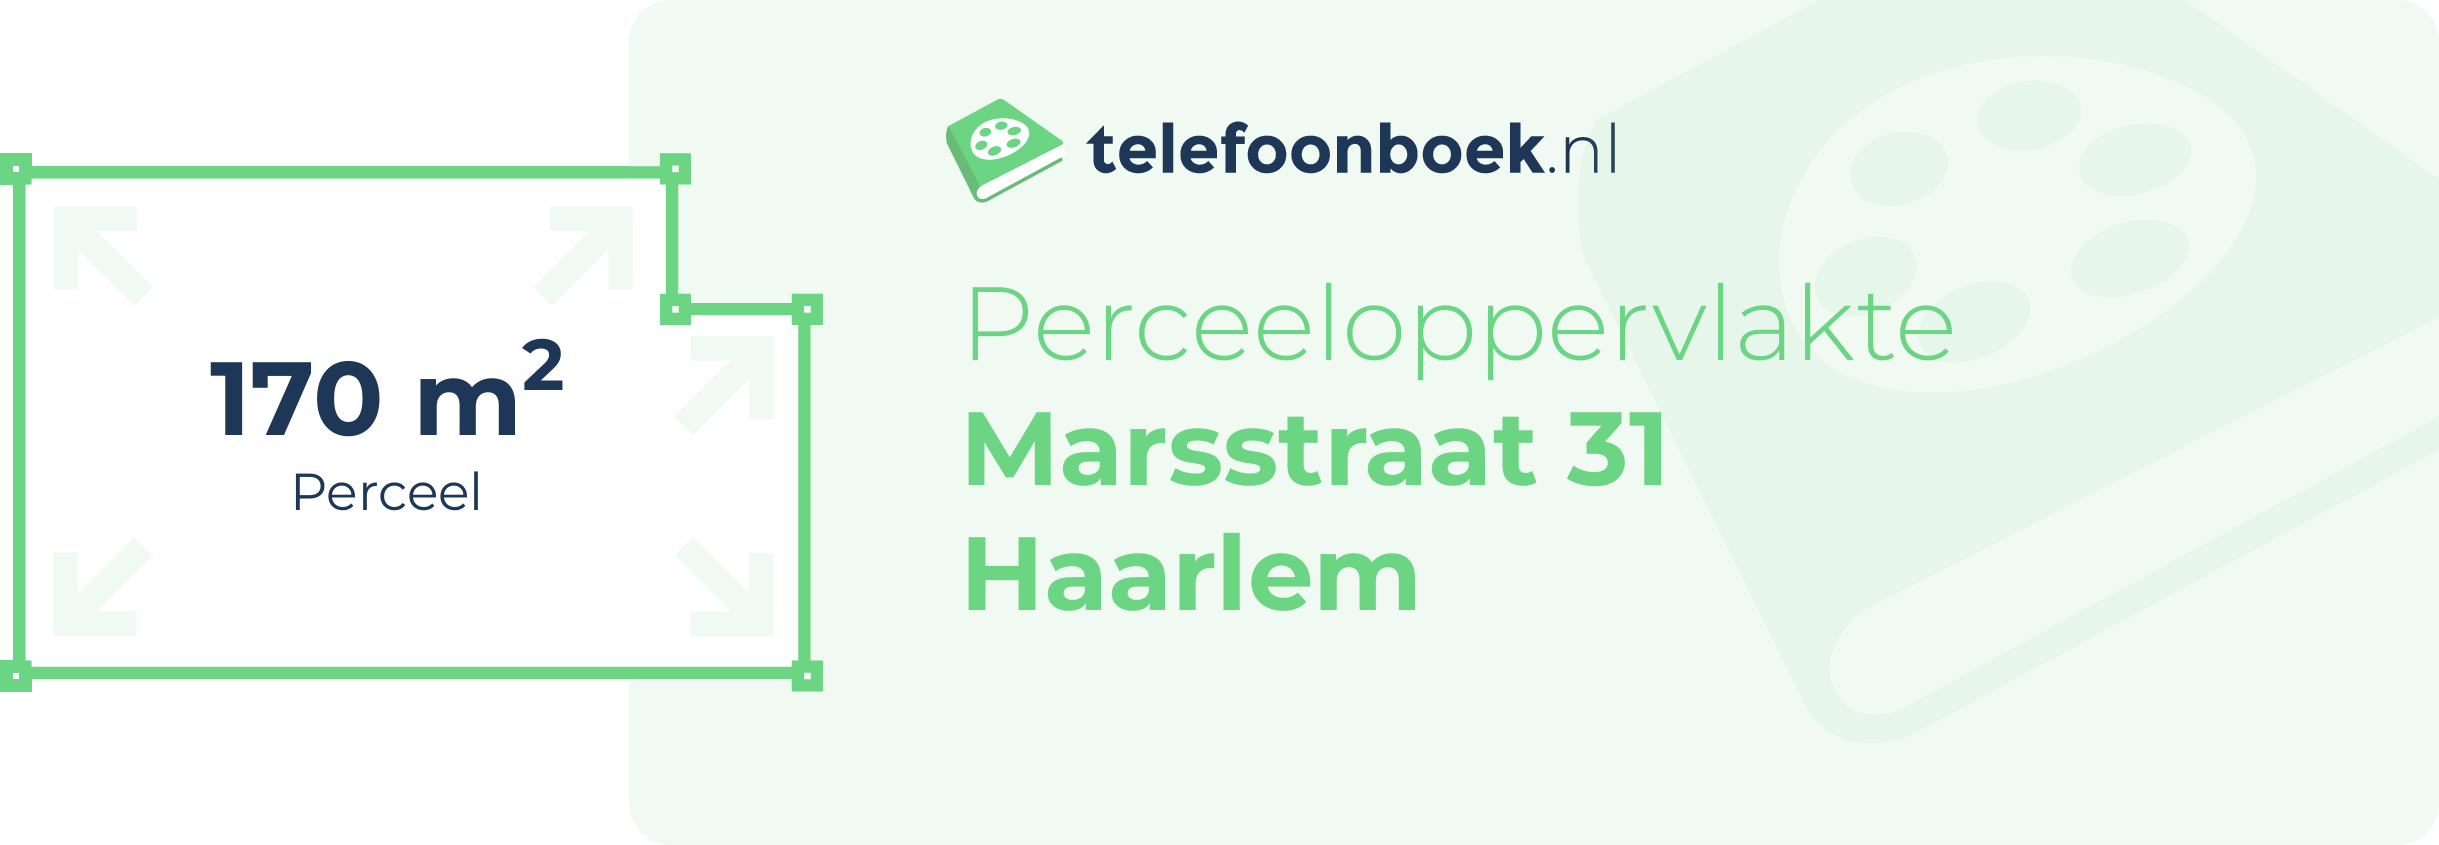 Perceeloppervlakte Marsstraat 31 Haarlem